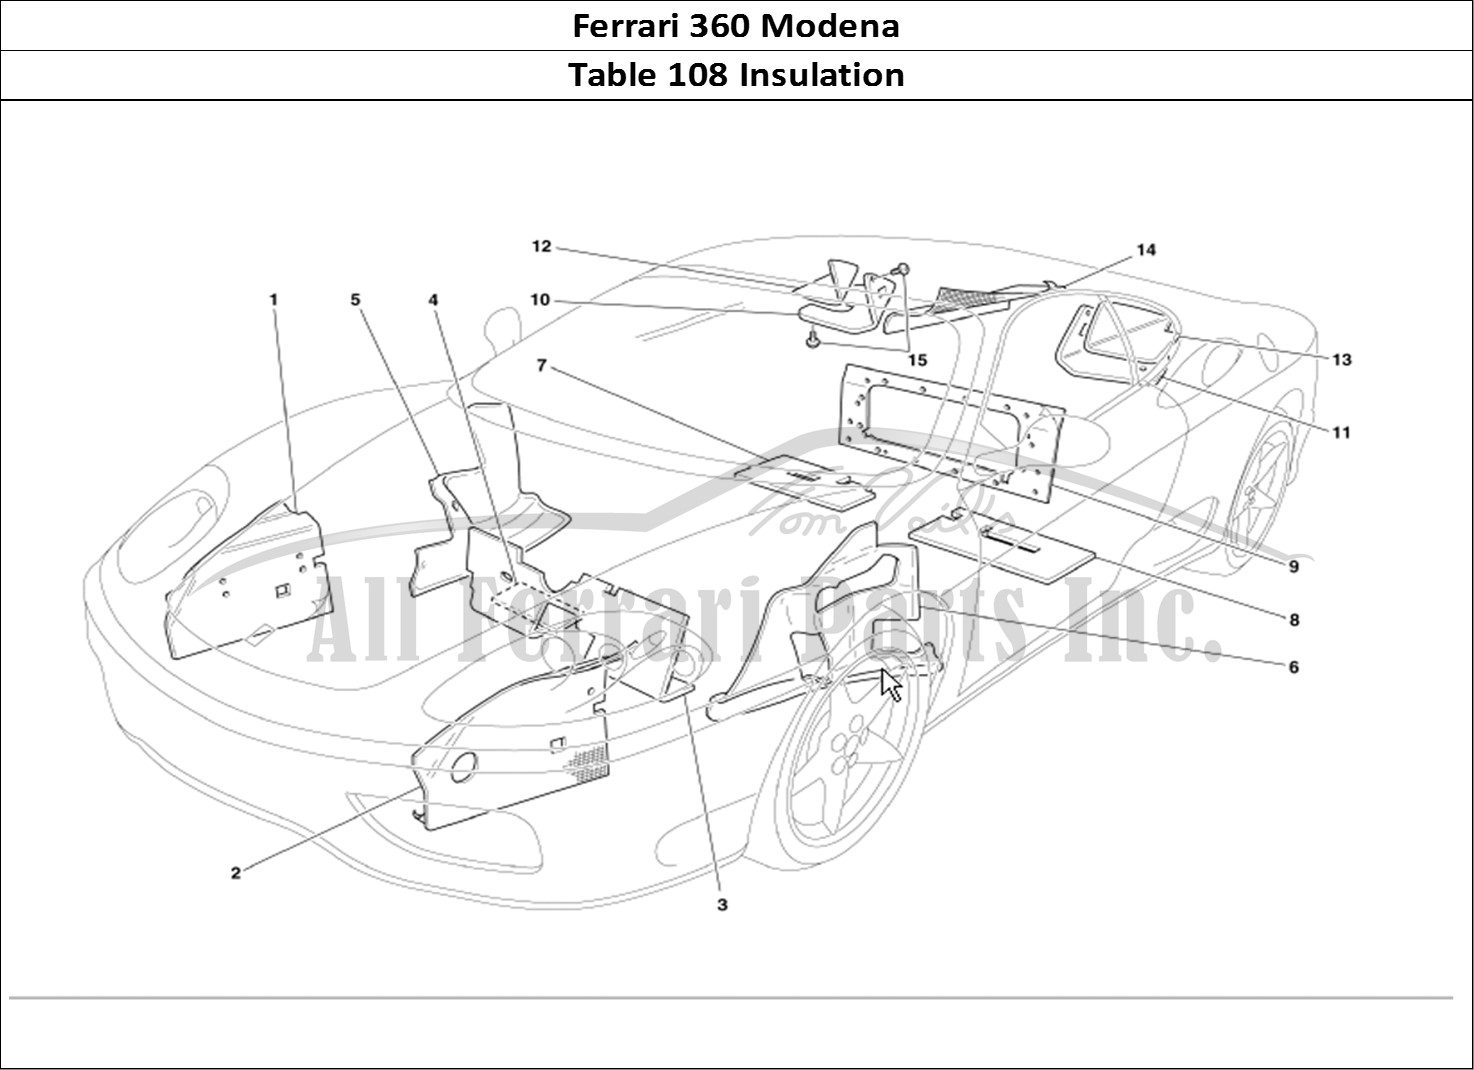 Ferrari Parts Ferrari 360 Modena Page 108 Insulations